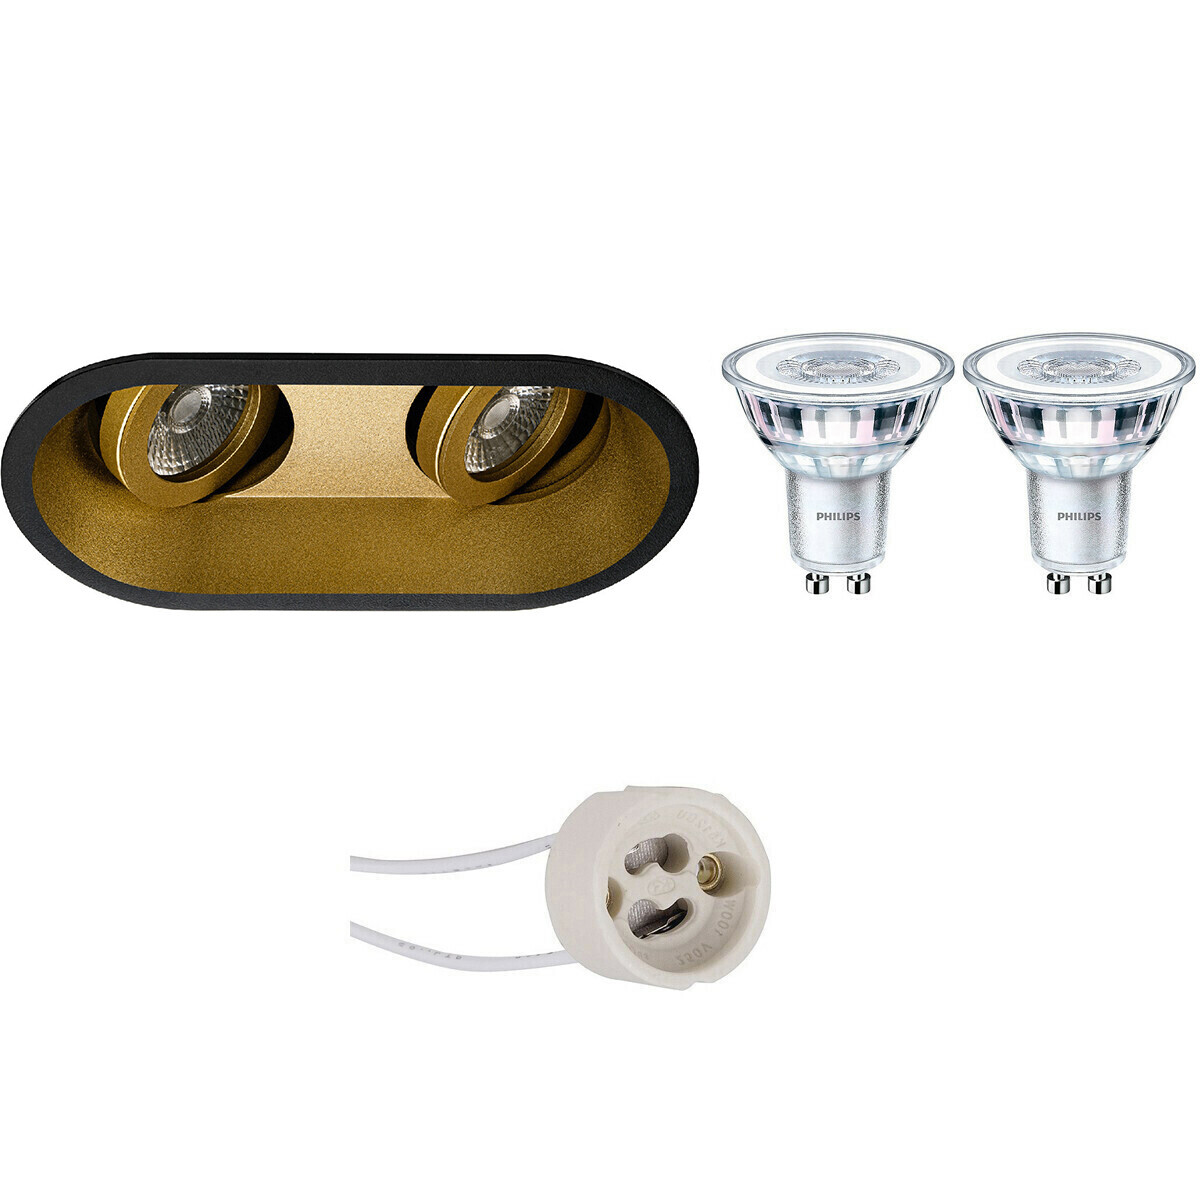 BES LED LED Spot Set - Pragmi Zano Pro - GU10 Fitting - Inbouw Ovaal Dubbel - Mat Zwart/Goud - Kantelbaar - 185x93mm - Philips - CorePro 840 36D - 5W - Natuurlijk Wit 4000K - Dimbaar